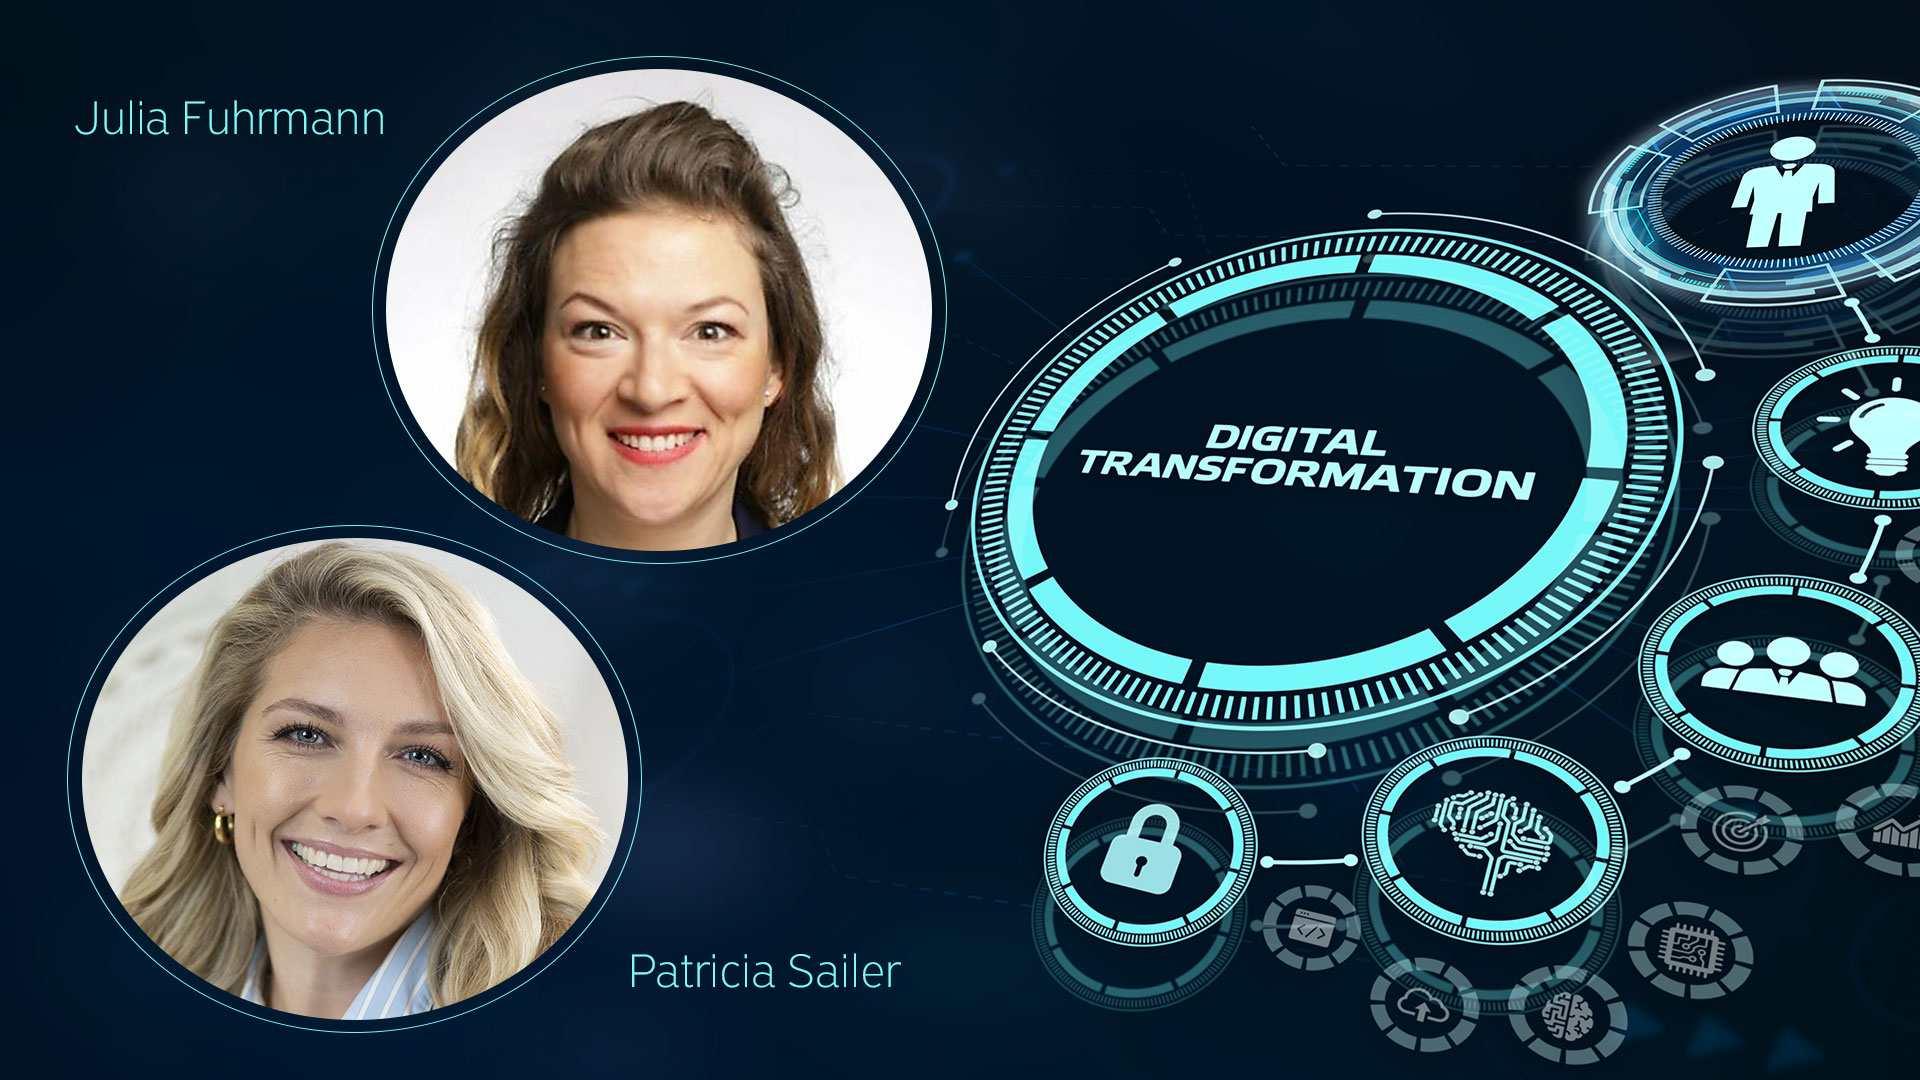 Portraits of Julia Fuhrmann and Patricia Sailer alongside a graphic titled "Digital Transformation"